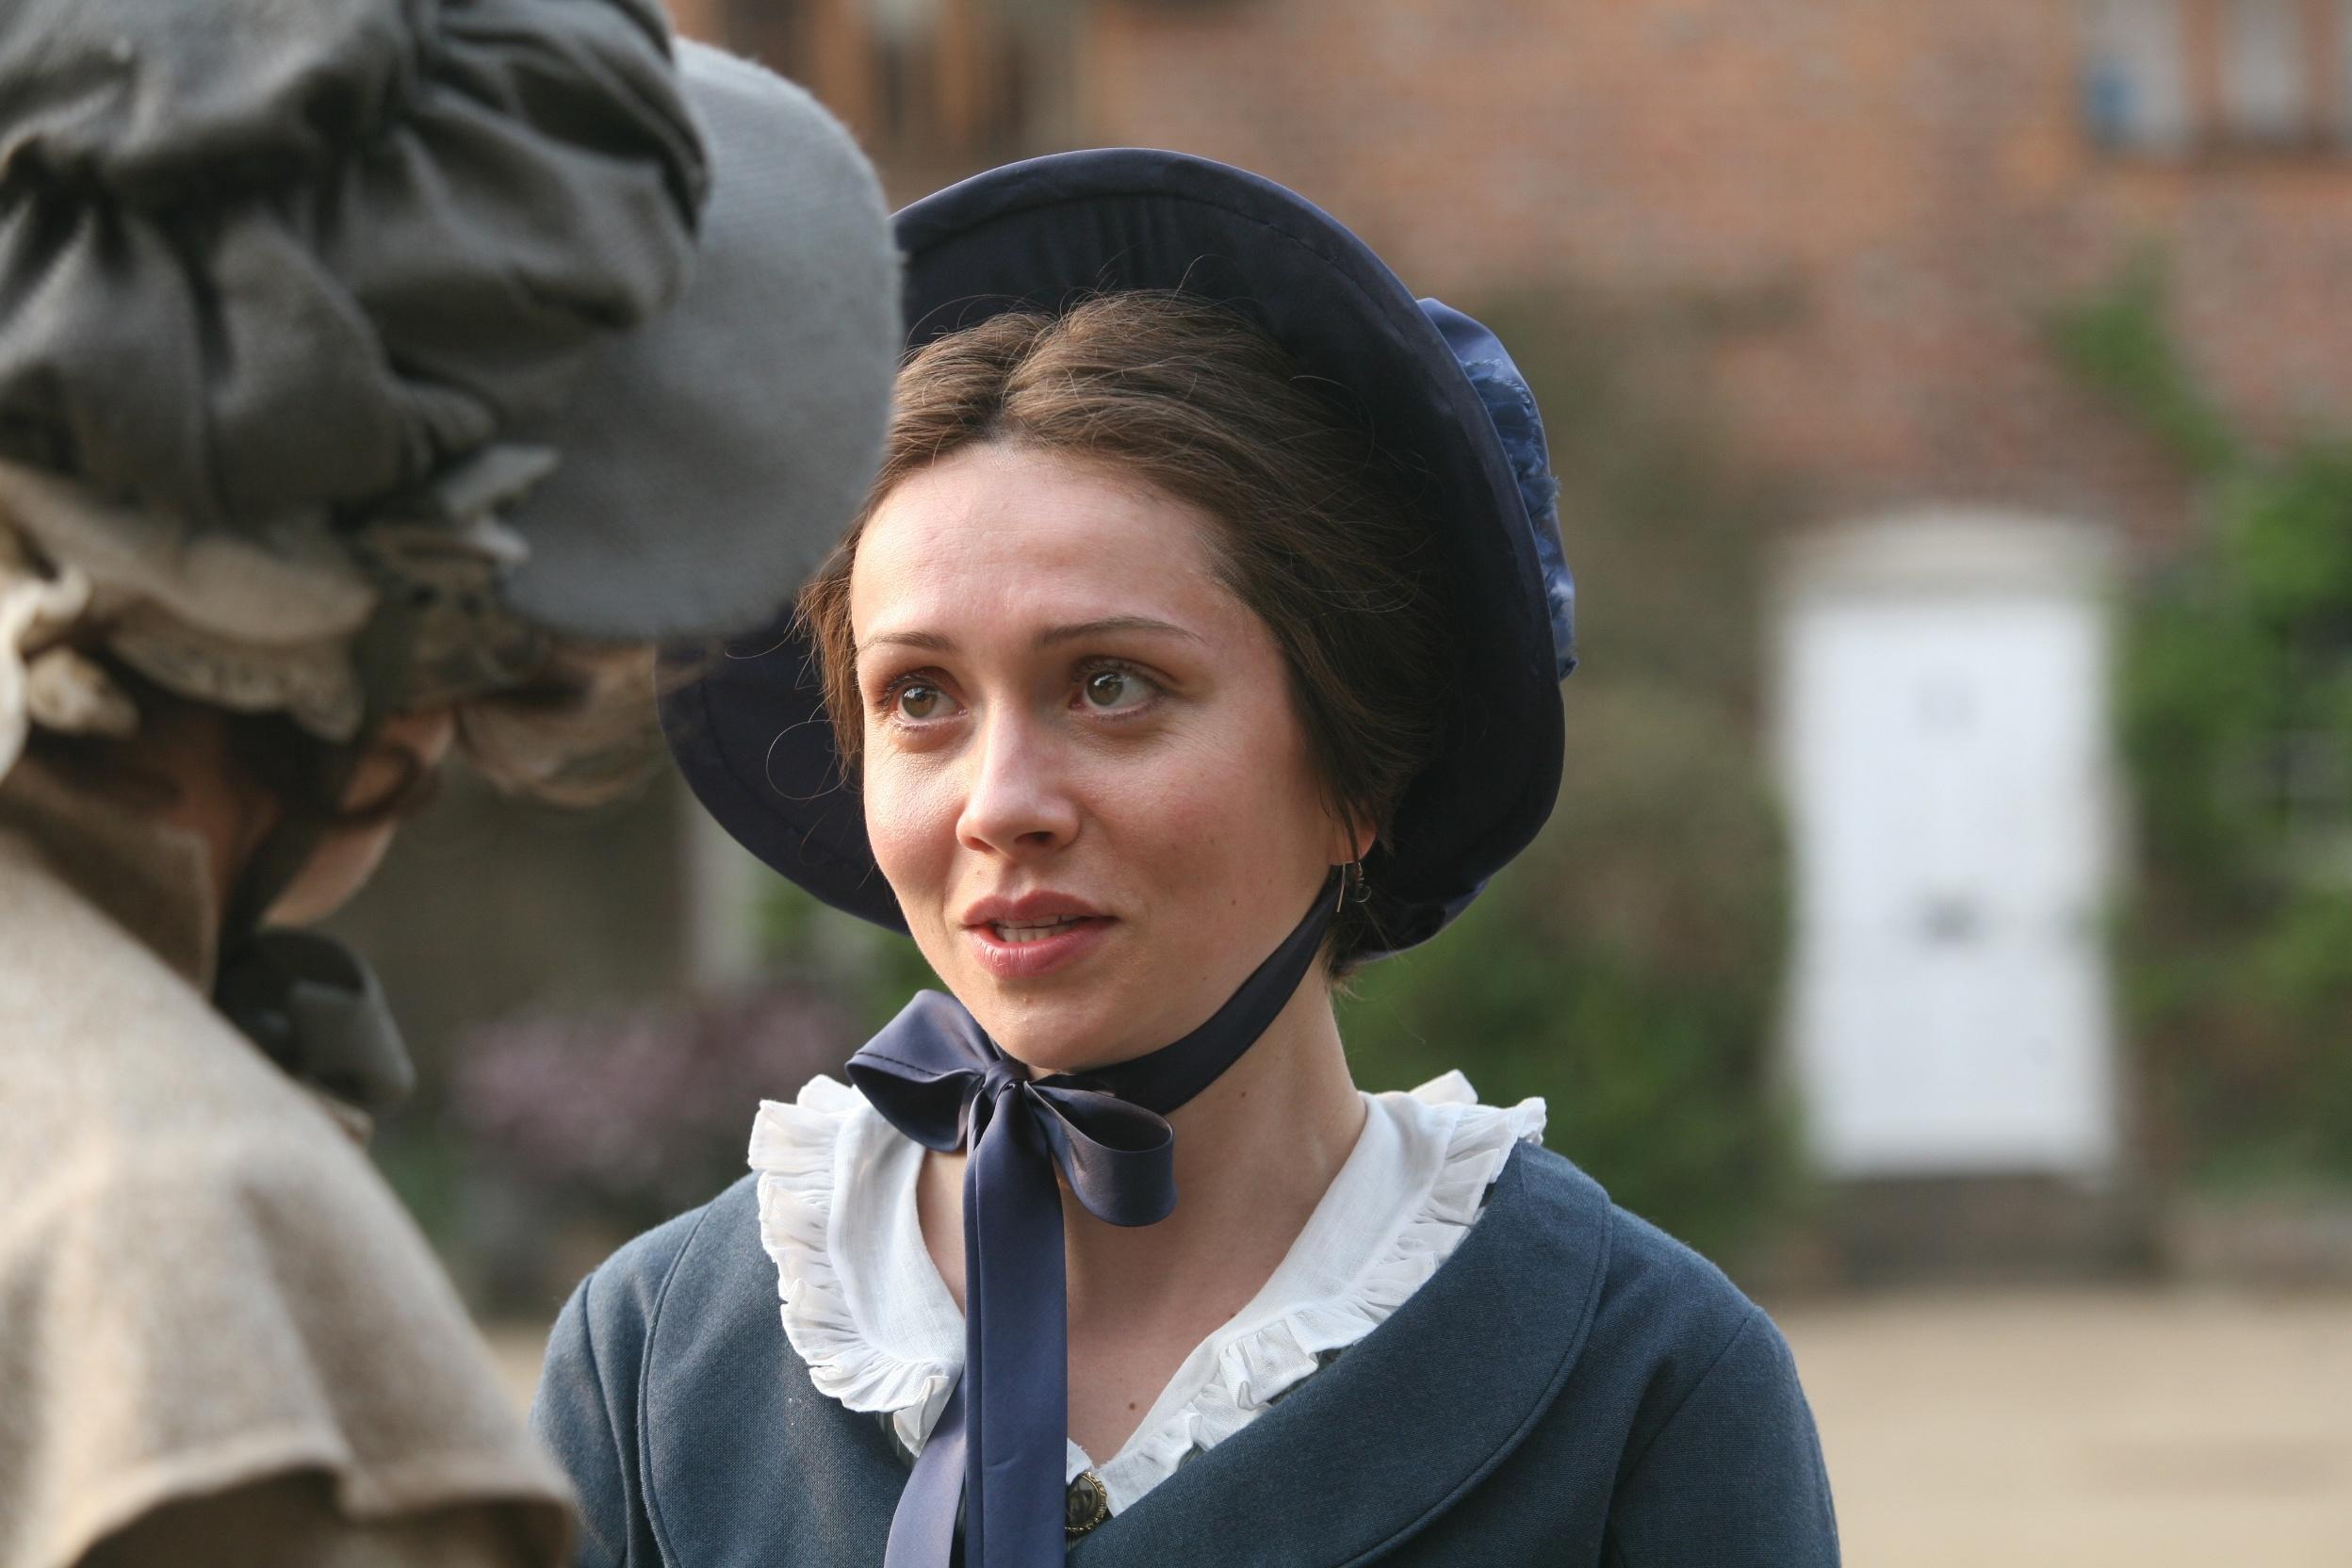 Laura Pyper in "Emma"